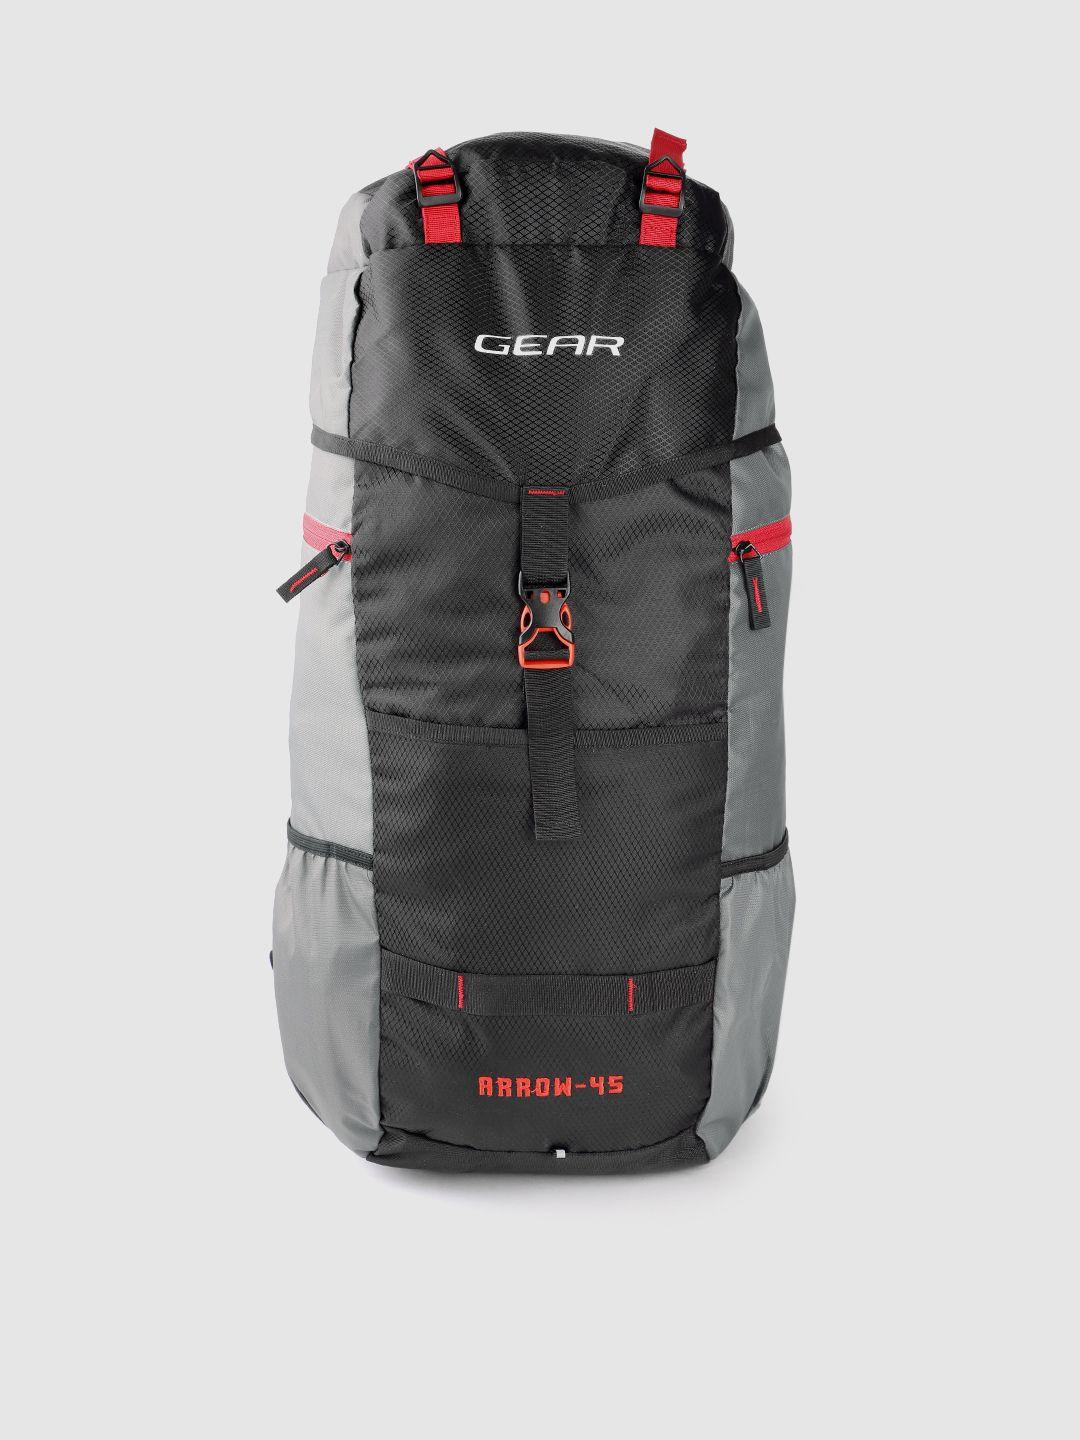 gear unisex colourblocked rucksack- 45l